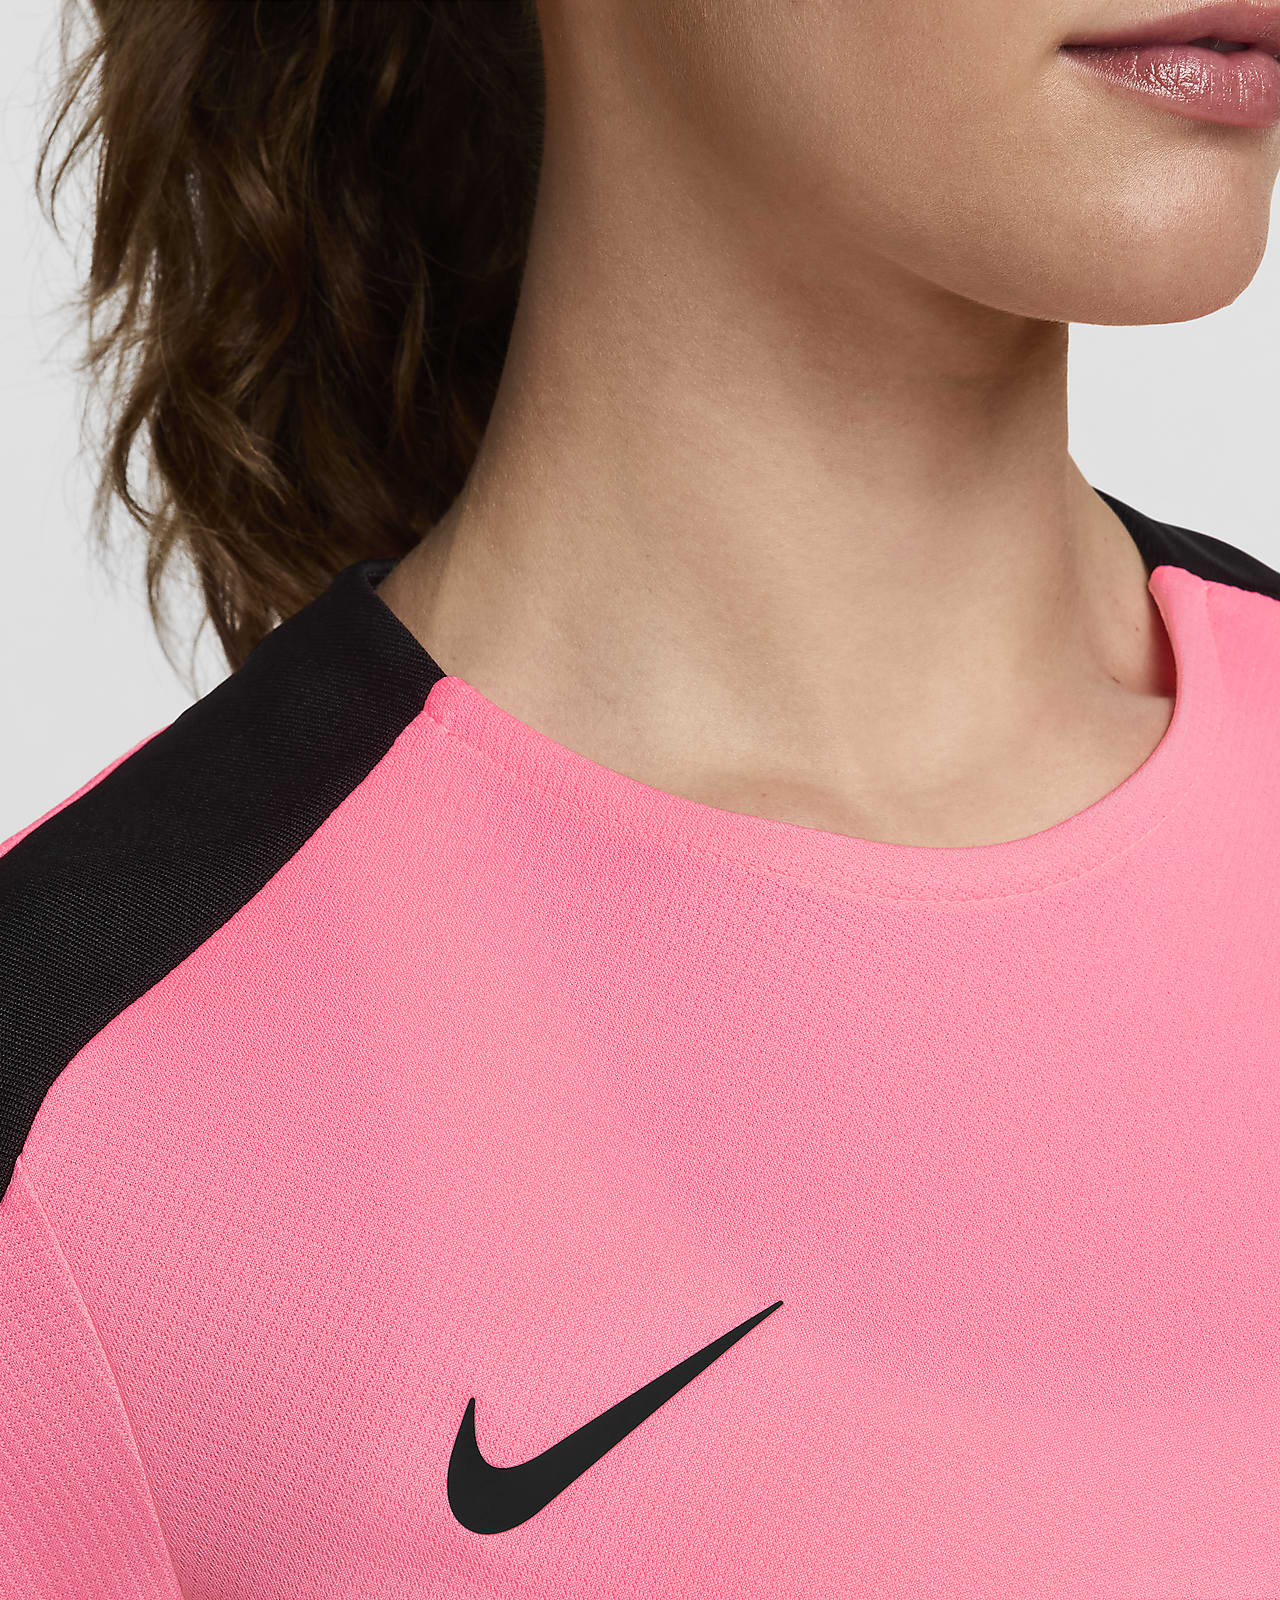 Nike dark blue sports shirt for women - price 25€